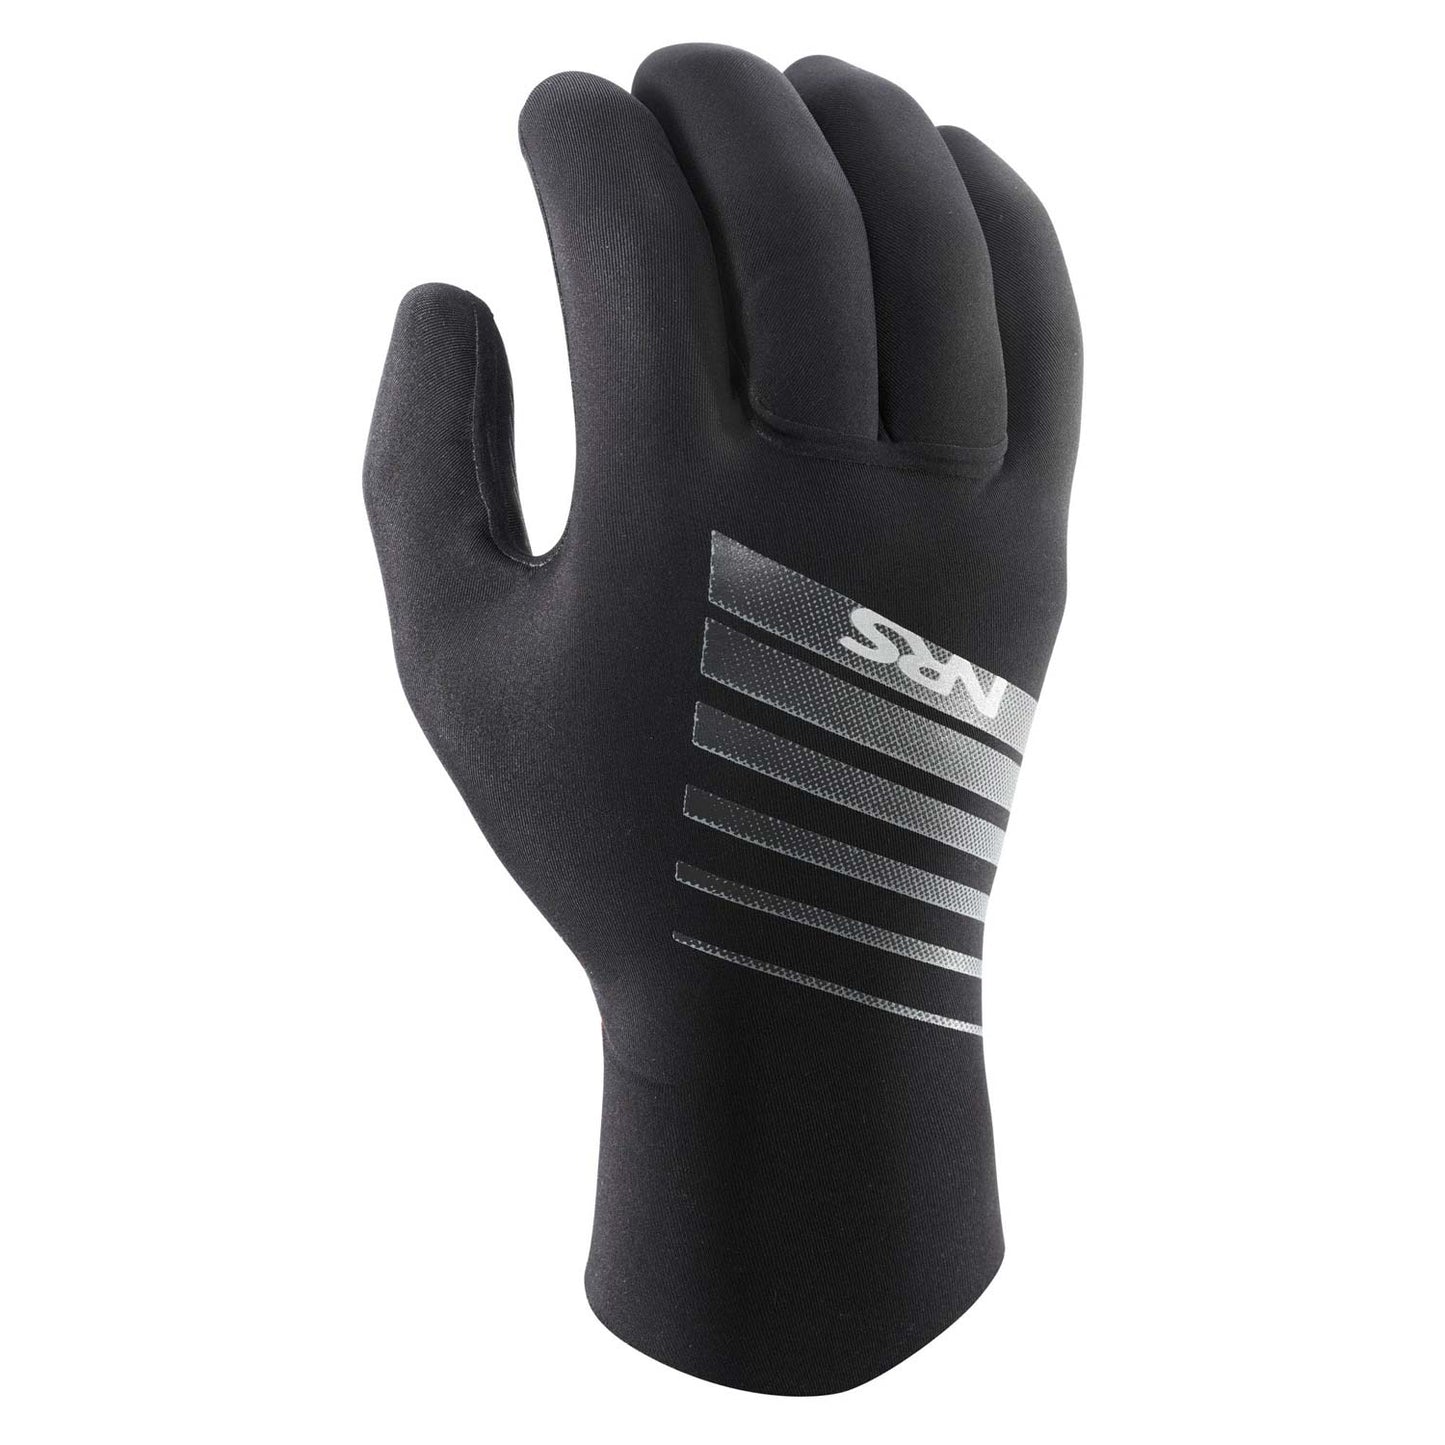 NRS Catalyst Gloves back